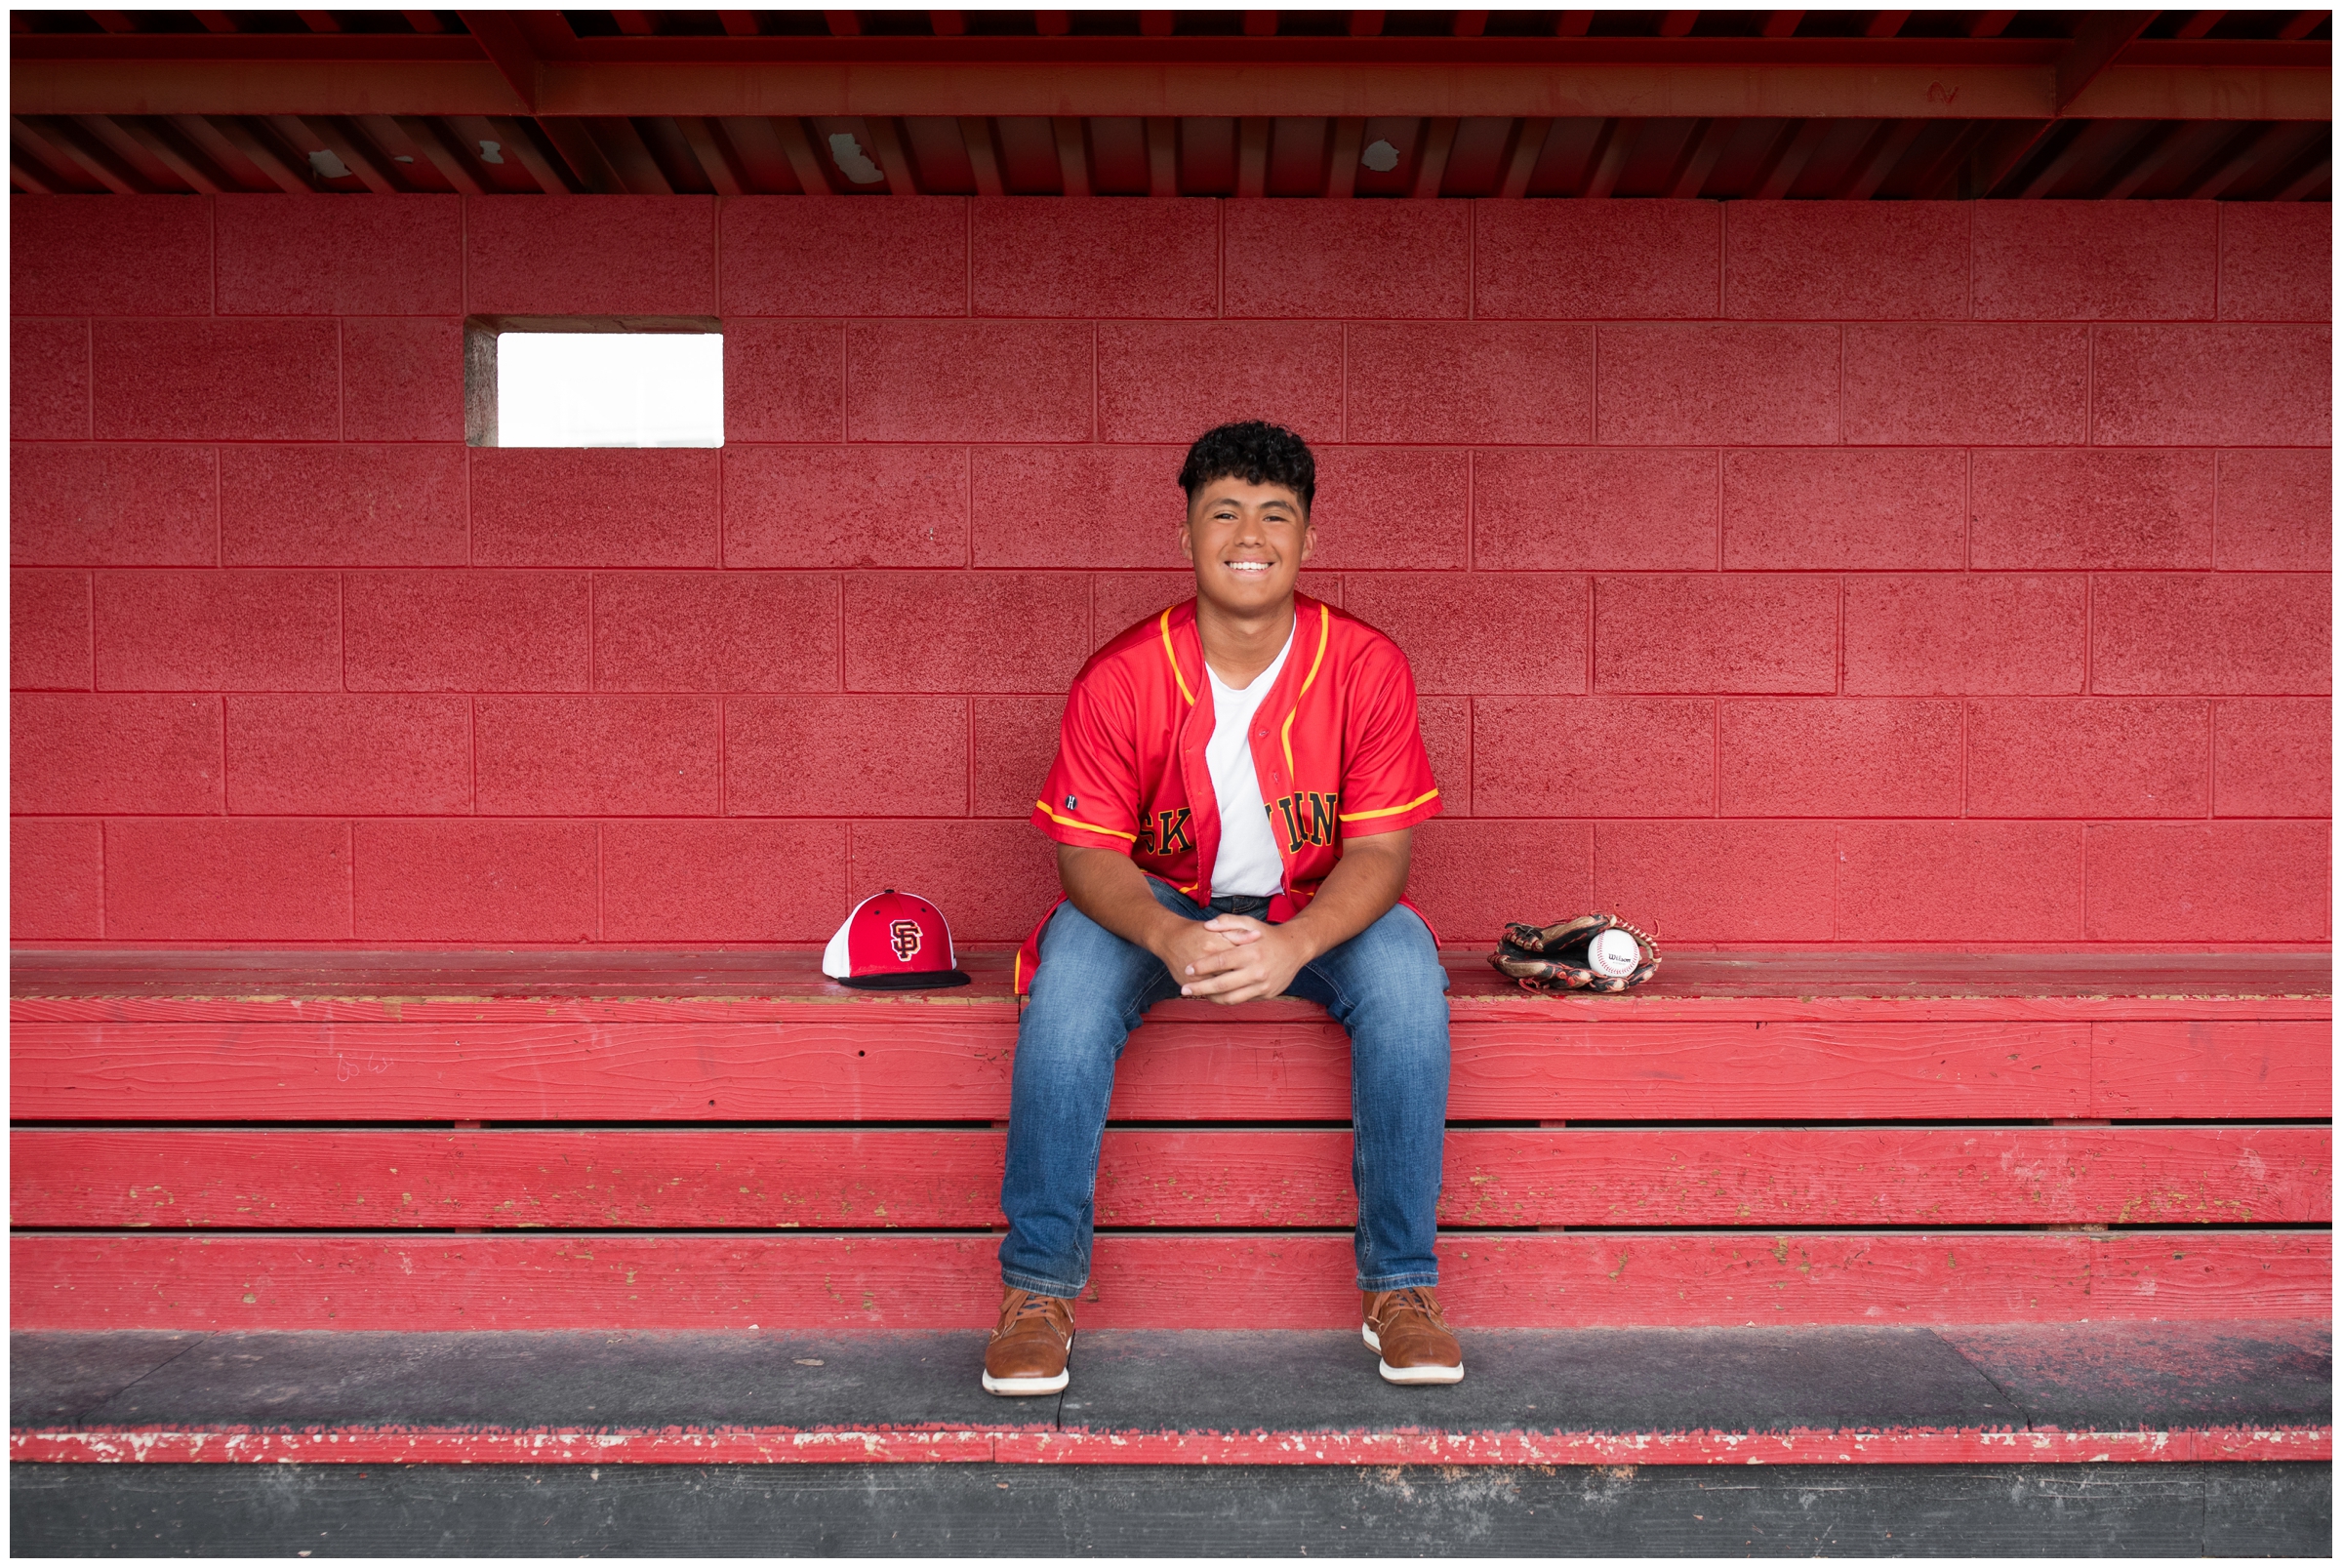 baseball senior photography inspiration at Skyline High school by Longmont photographer Plum Pretty Photography 